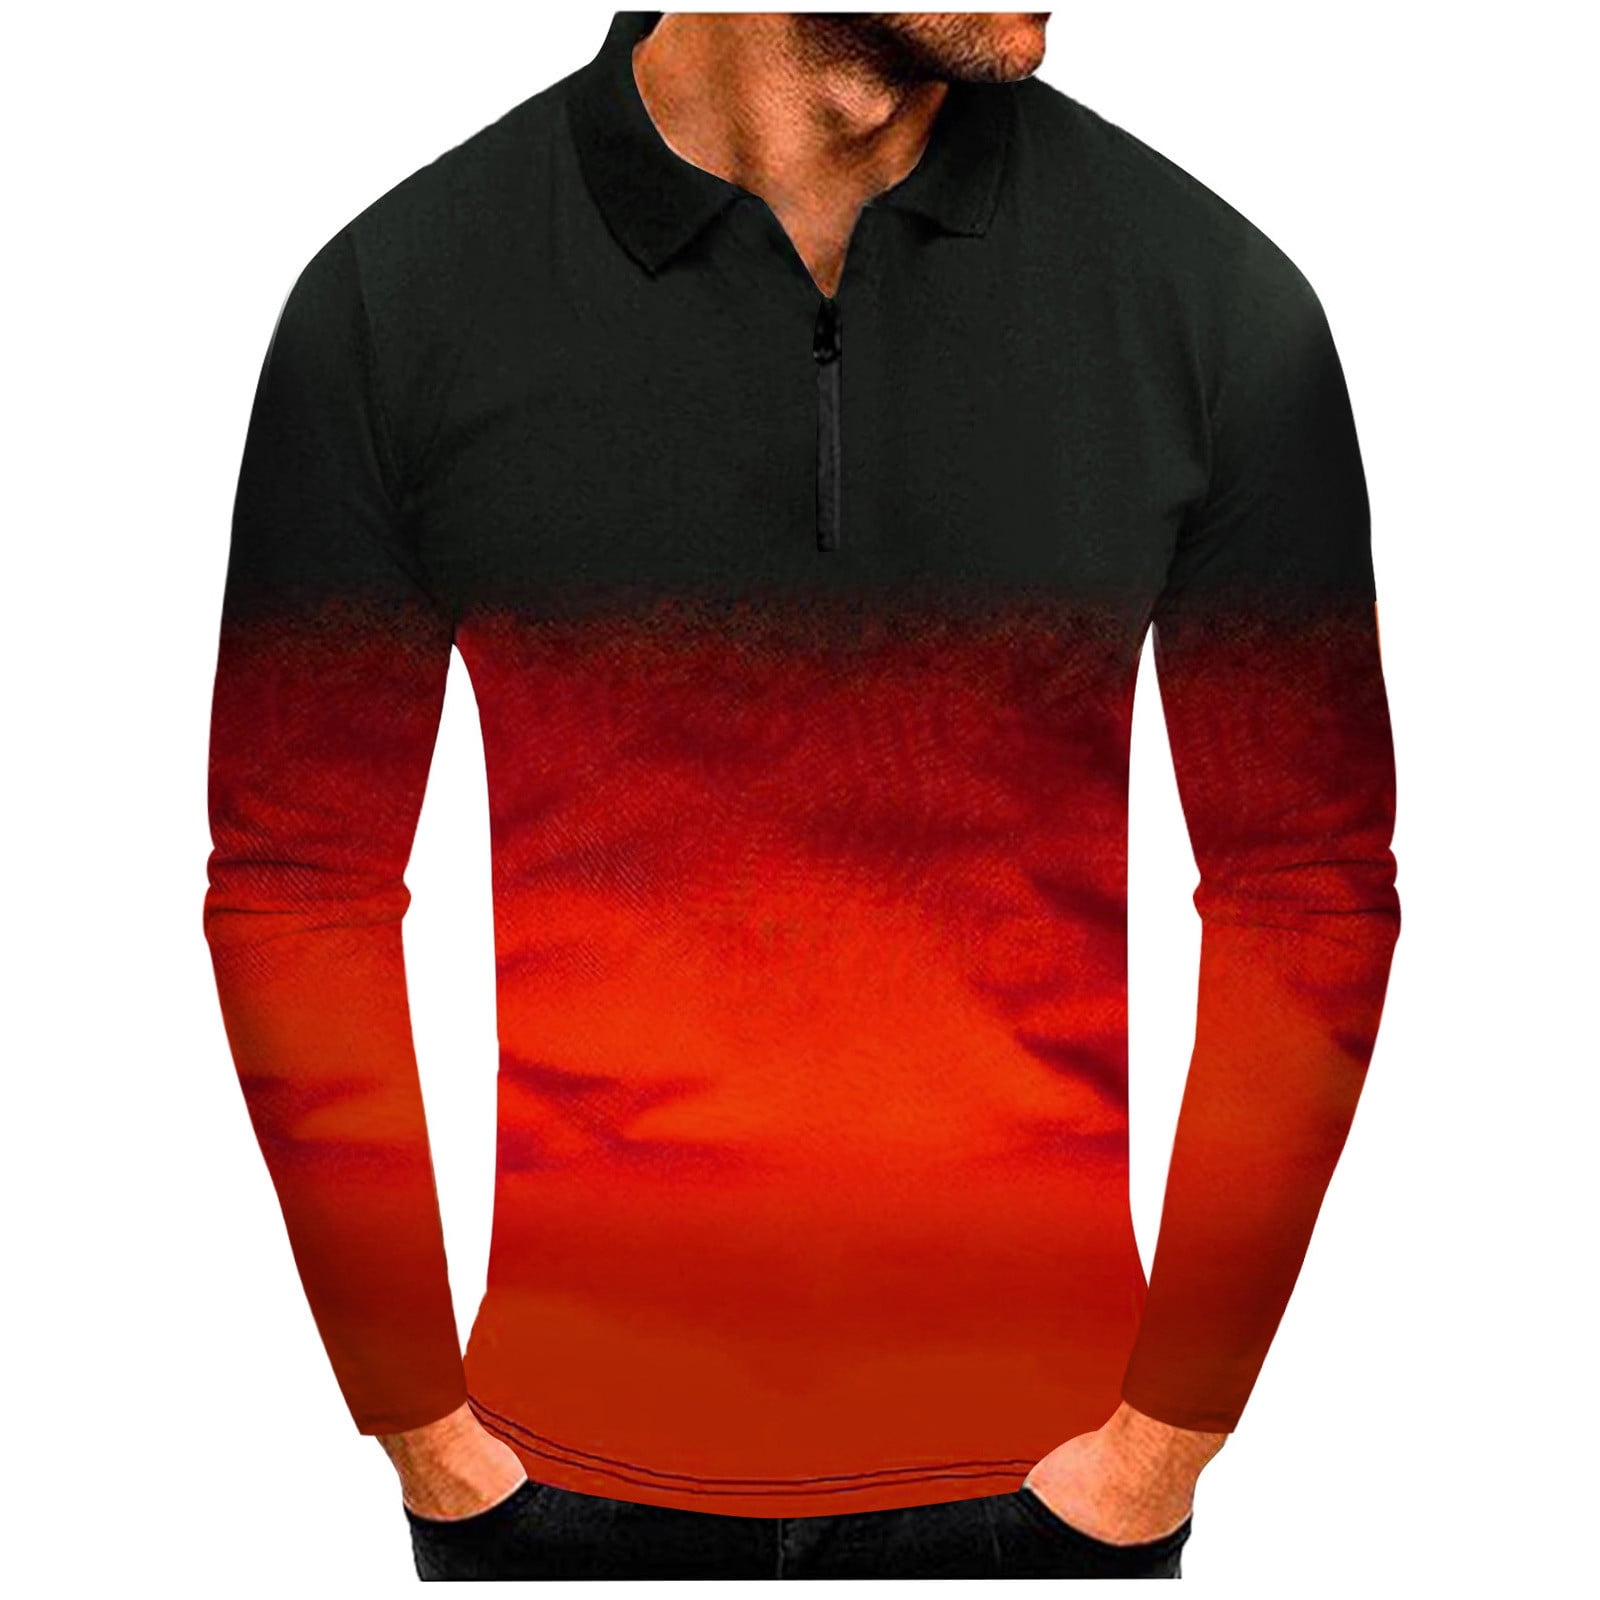 Men's Dry Fit Polo Shirt Long Sleeve Shirts Orange M - Walmart.com